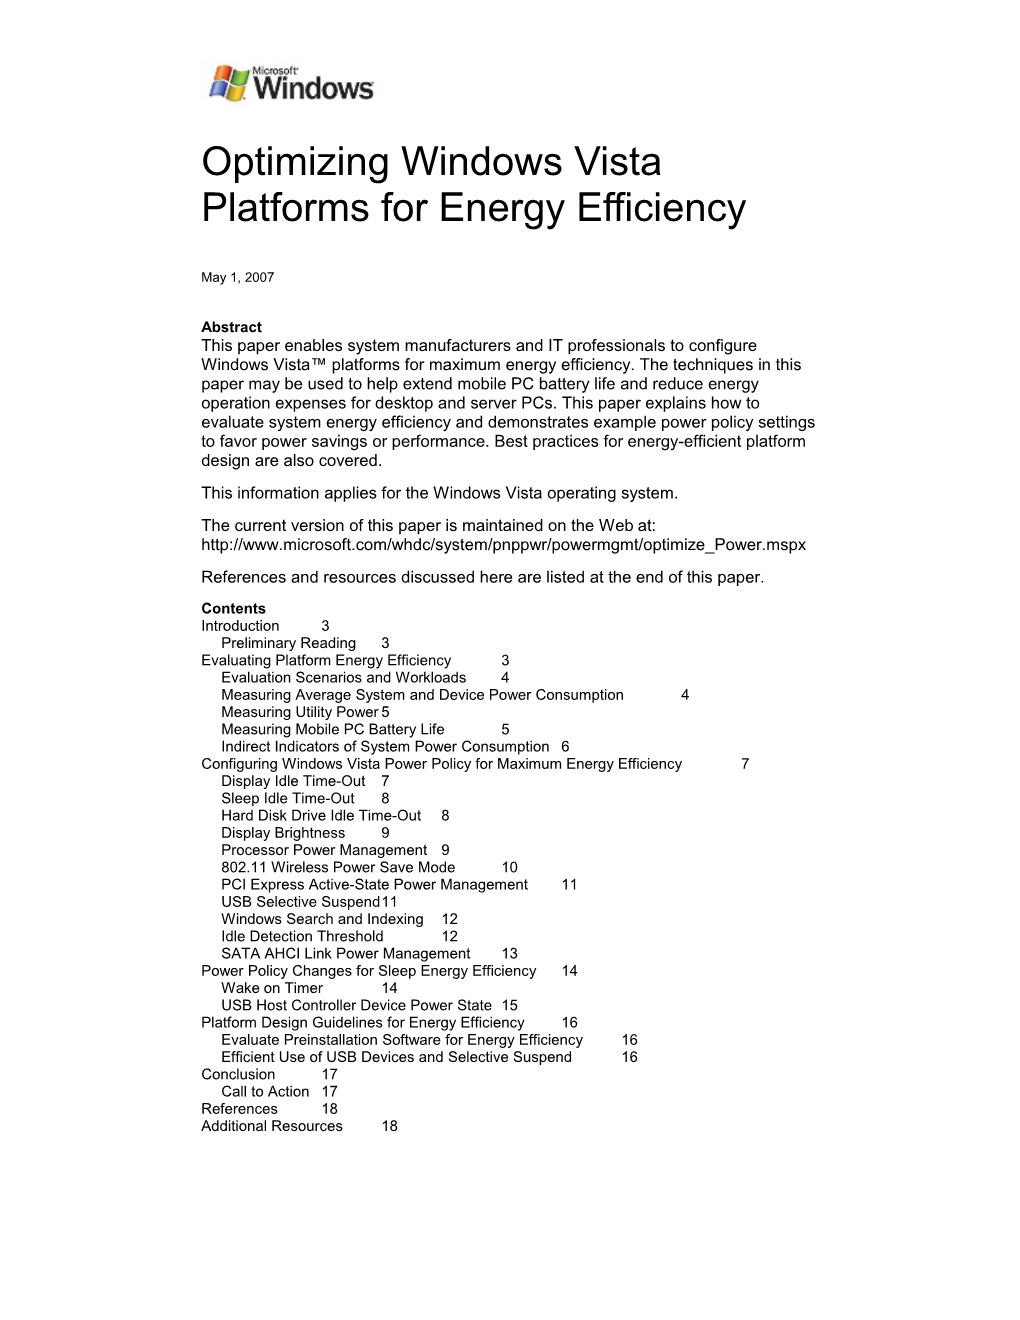 Optimizing Windows Vista Platforms for Energy Efficiency